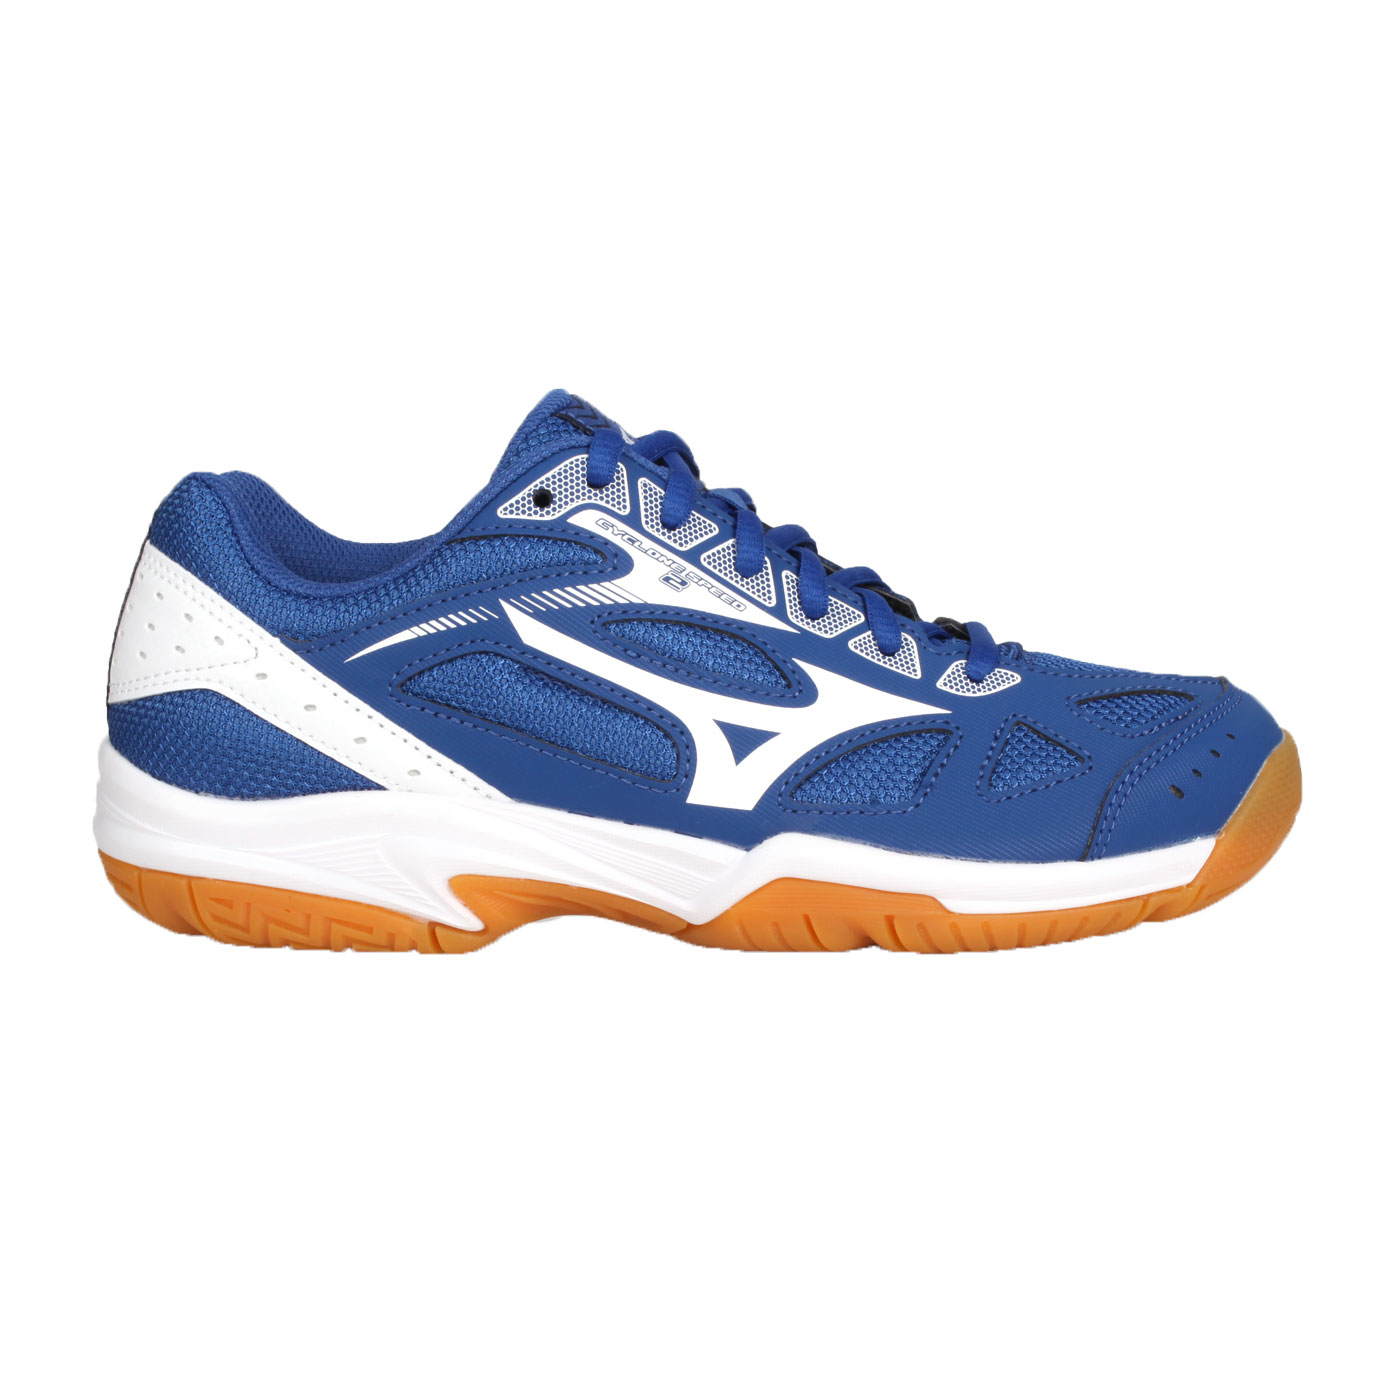 MIZUNO 排球鞋  @CYCLONE SPEED 2@V1GA198002 - 藍白